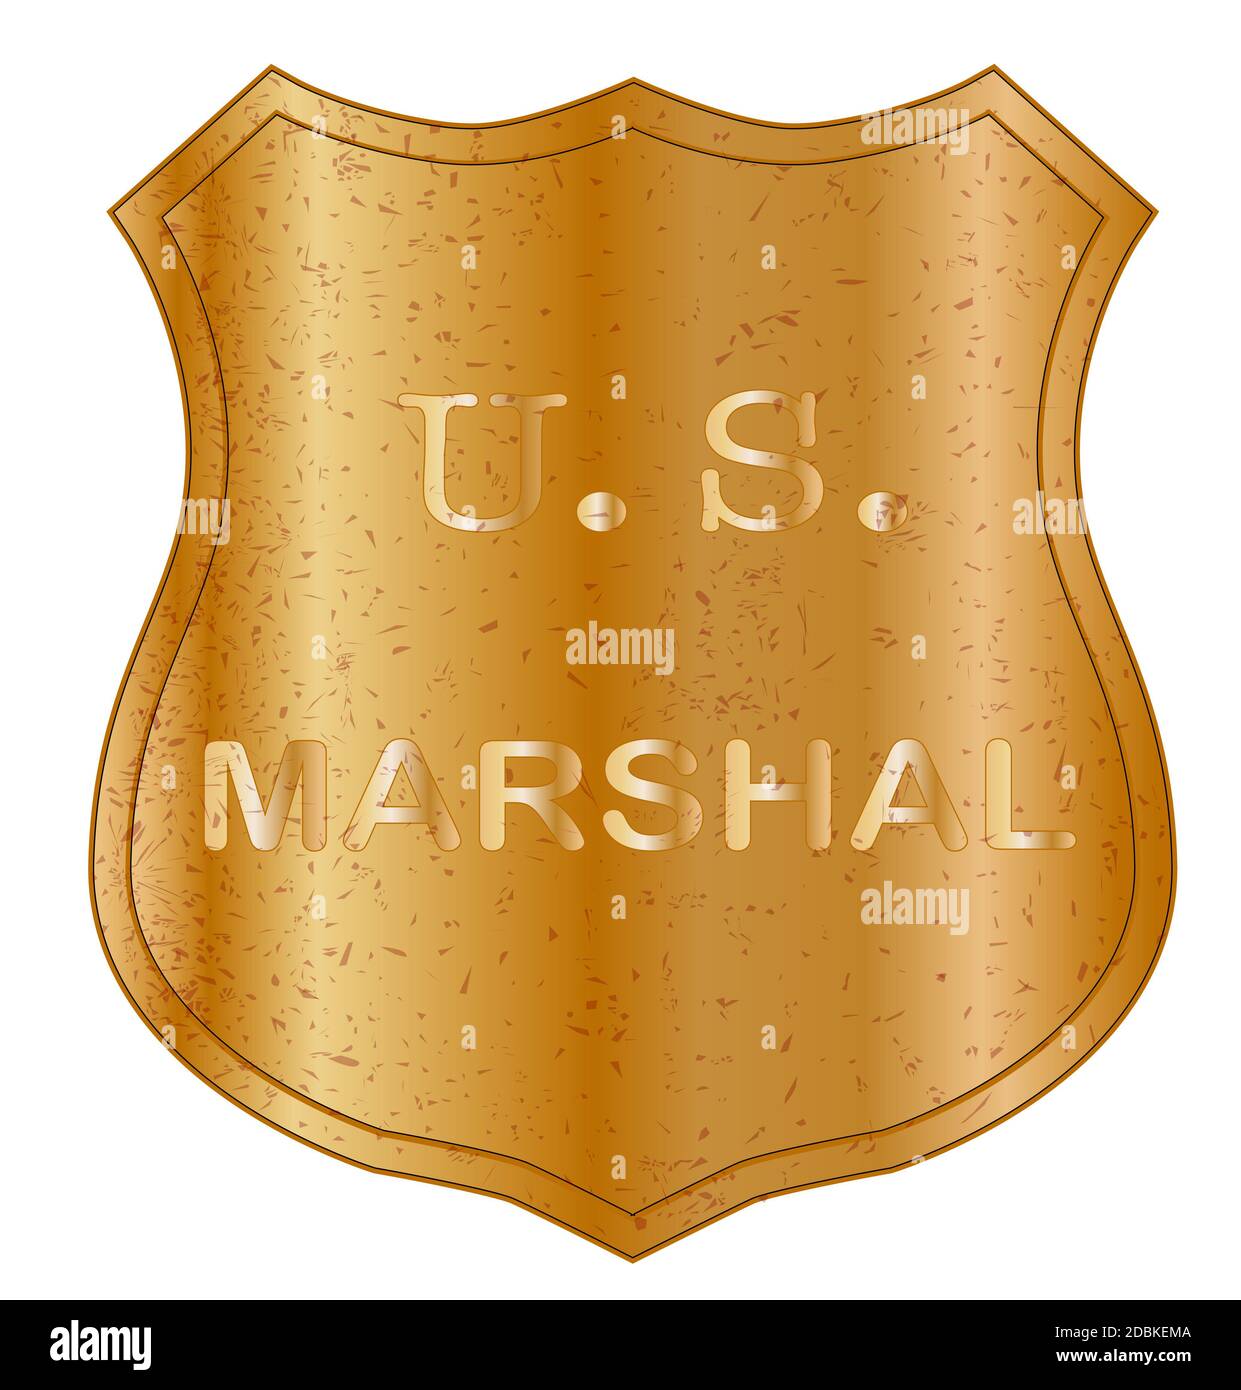 A United States Marshal shield badge isolated on white. Stock Photo